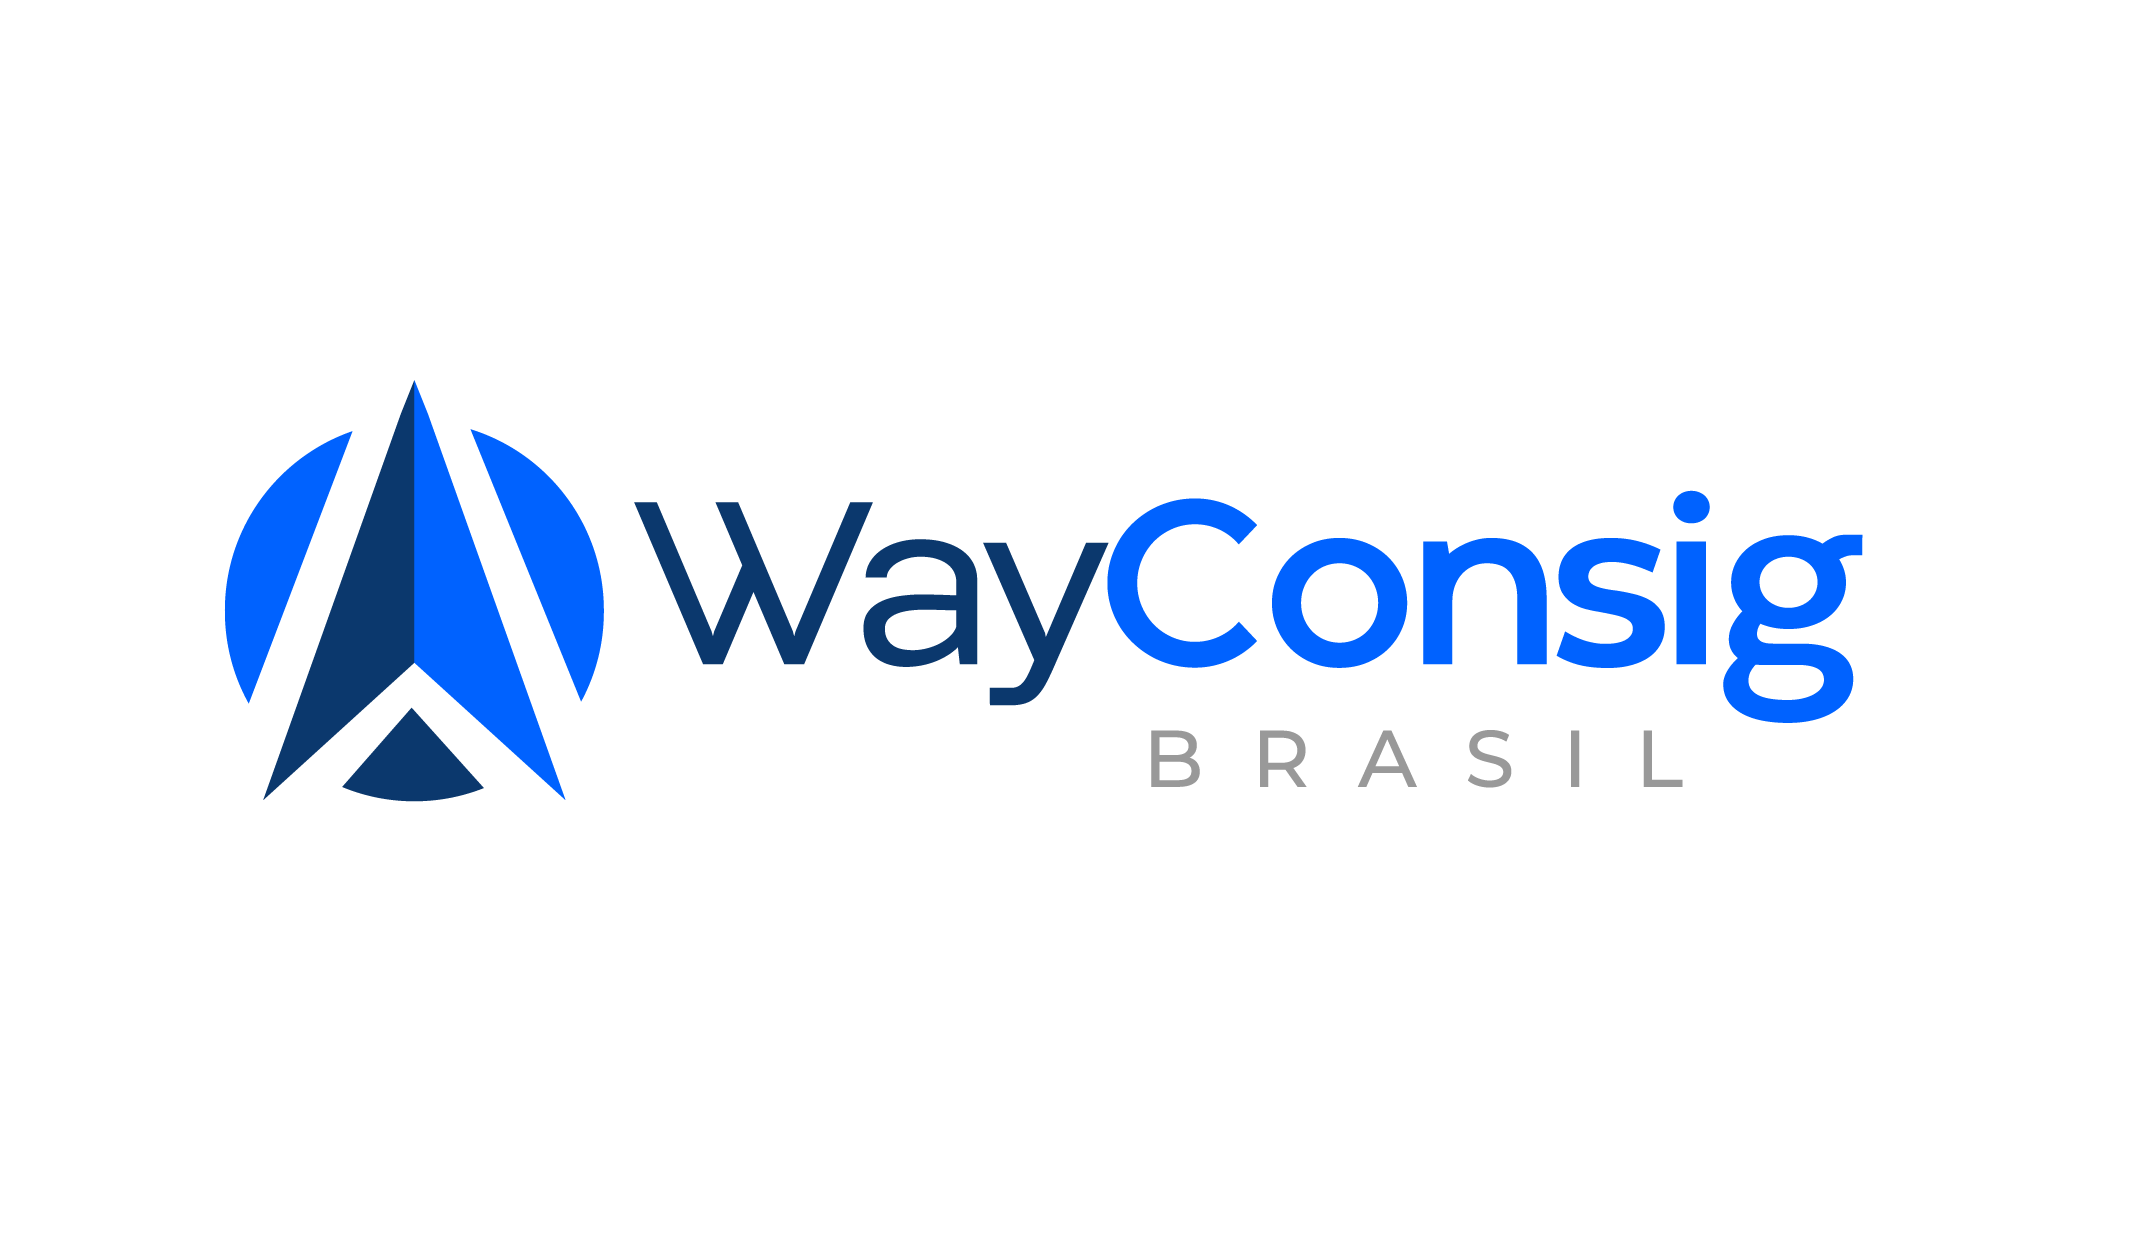 Way Consig Brasil